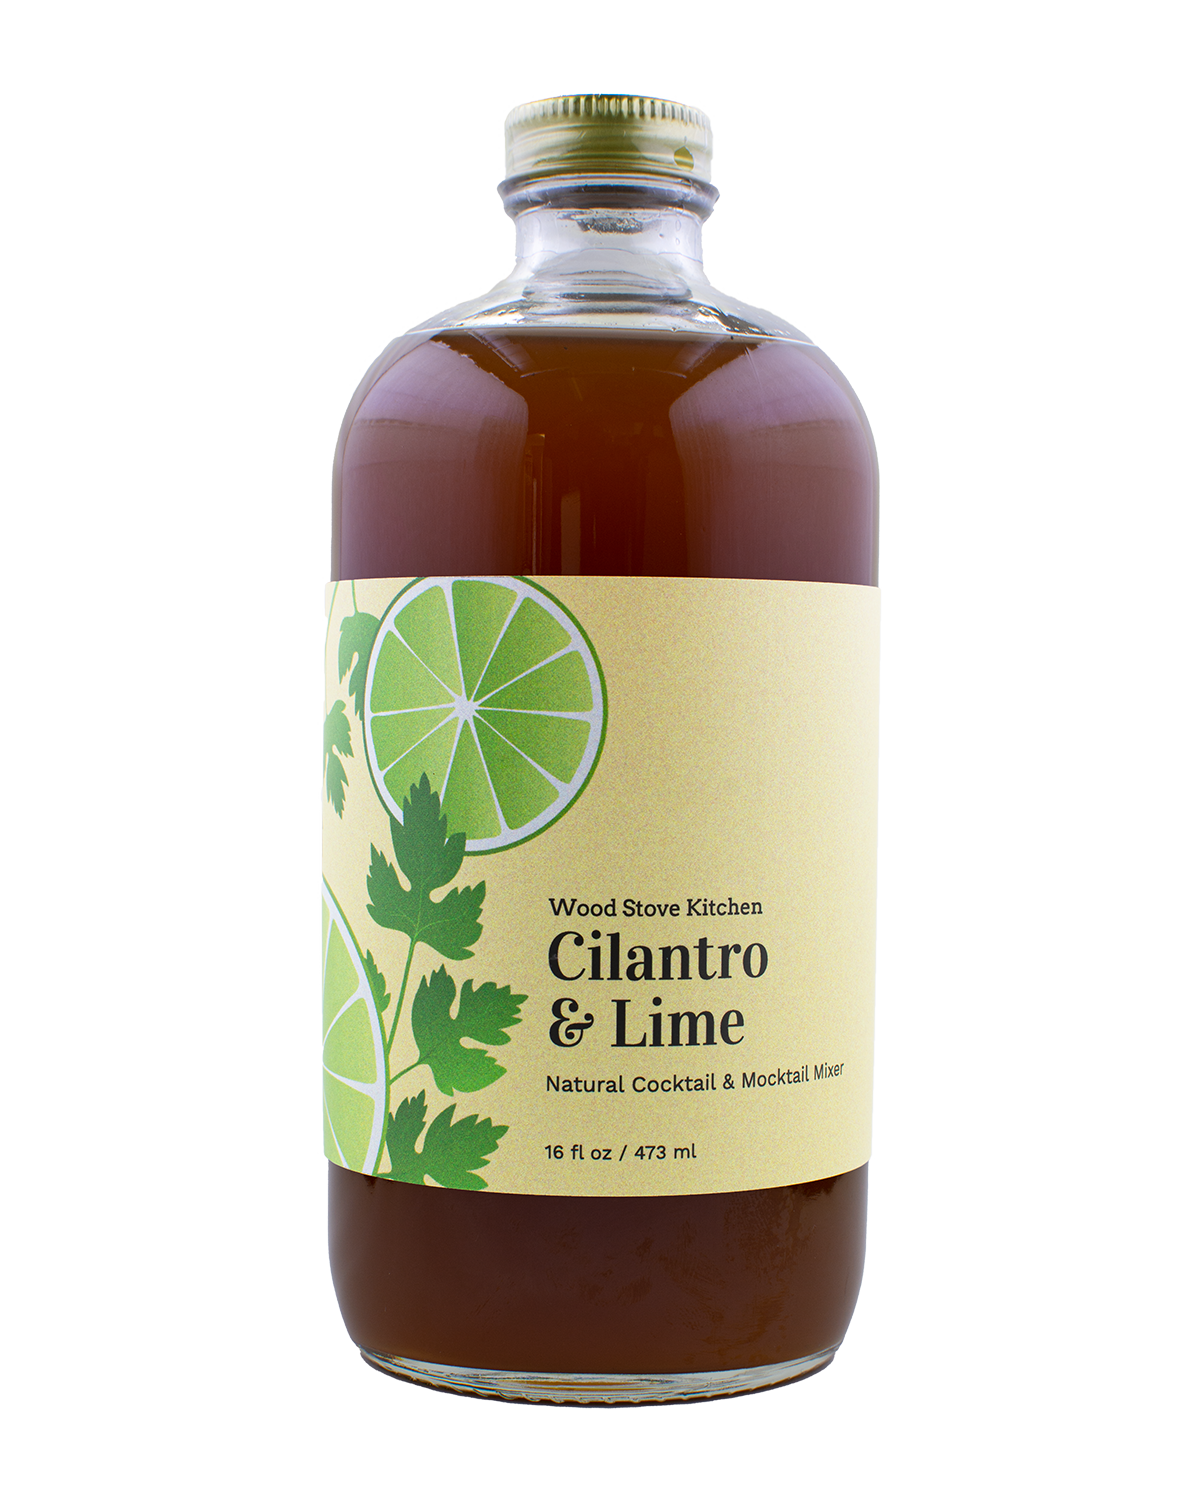 Wood Stove Kitchen - Cilantro Lime Cocktail & Drink Mix, 16 fl oz